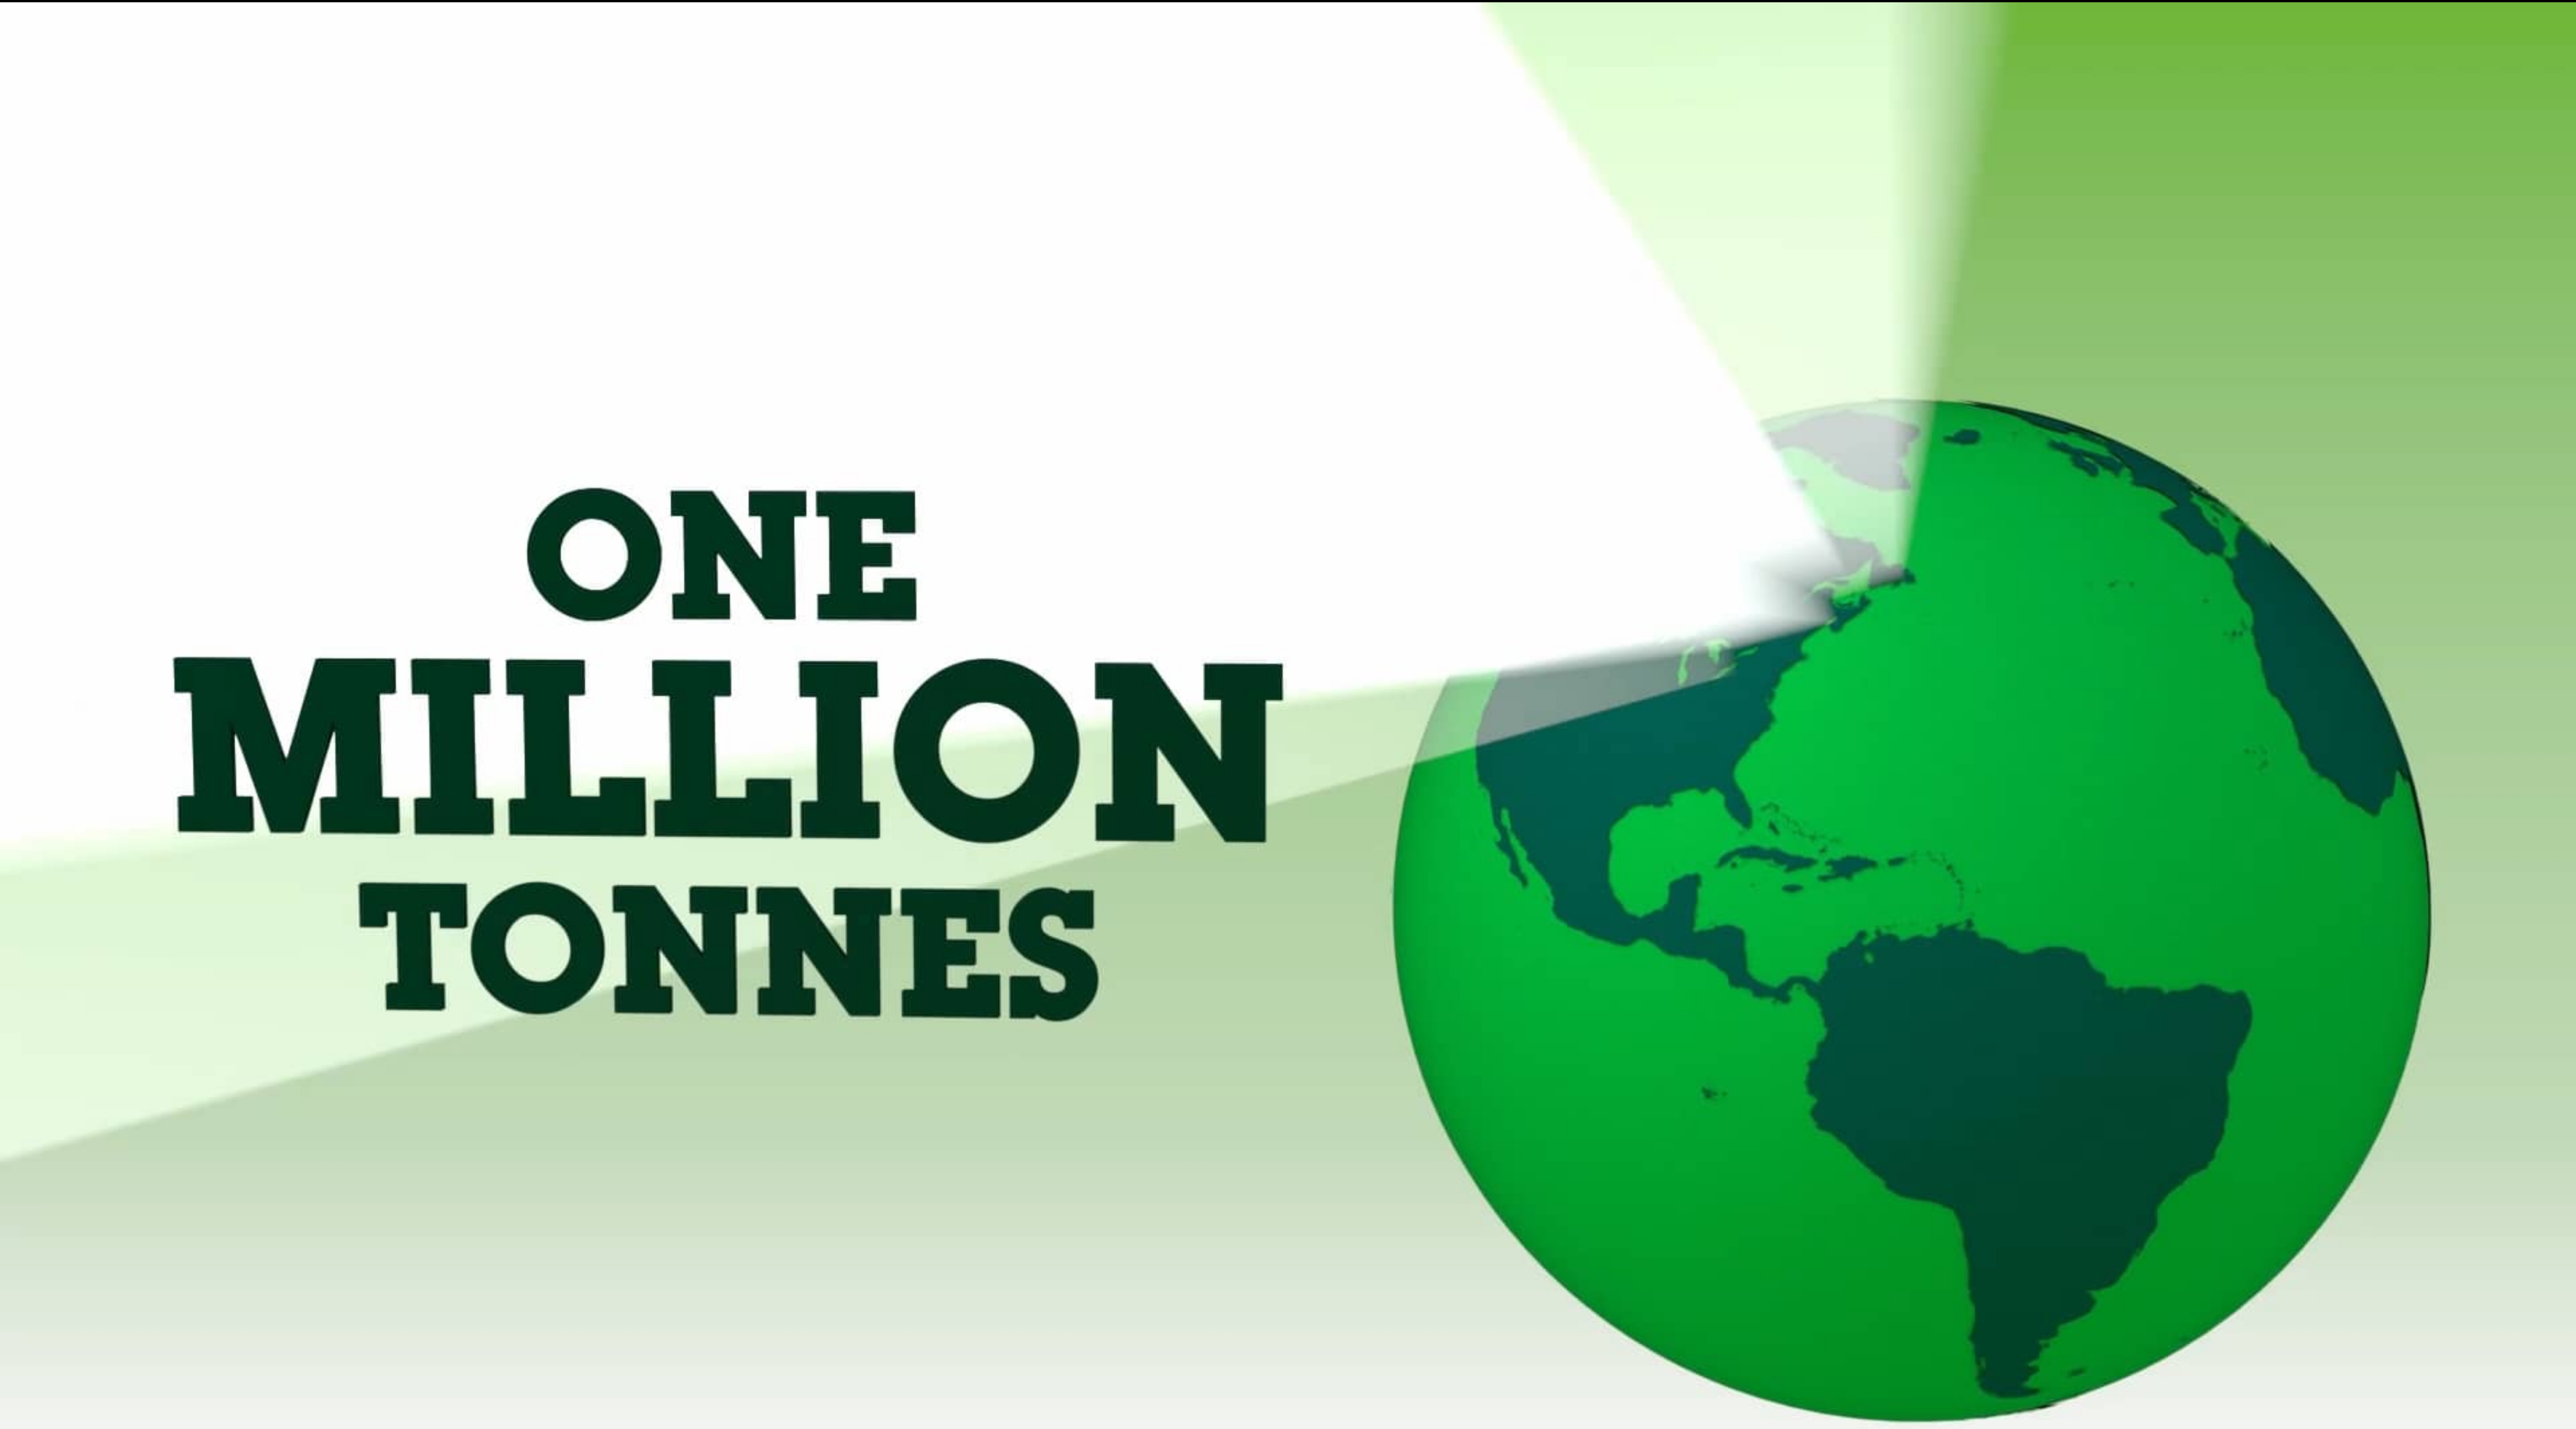 one million tonnes